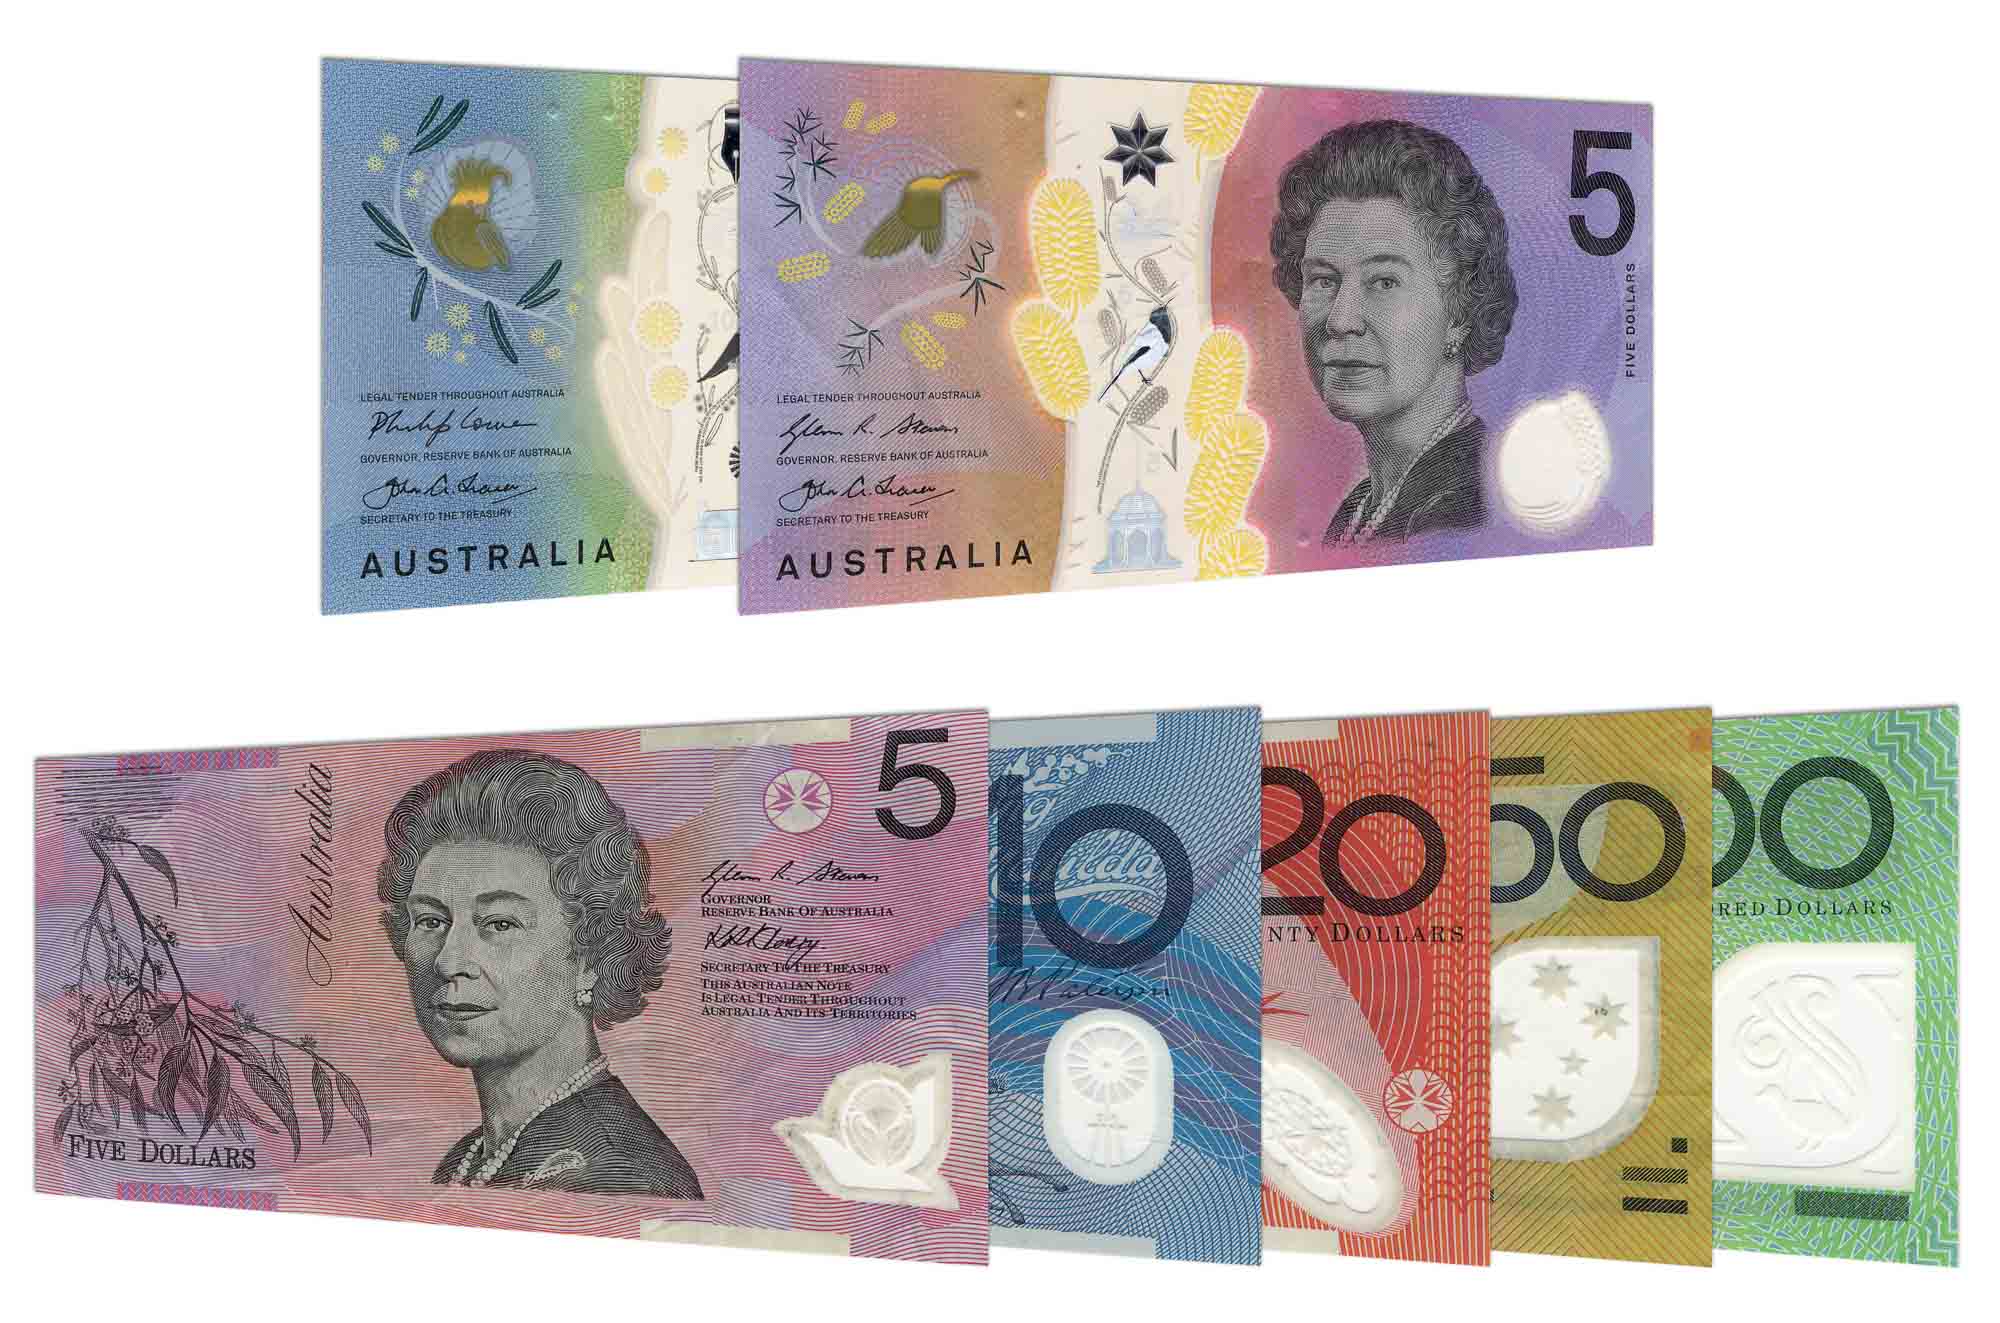 australian dollar to php